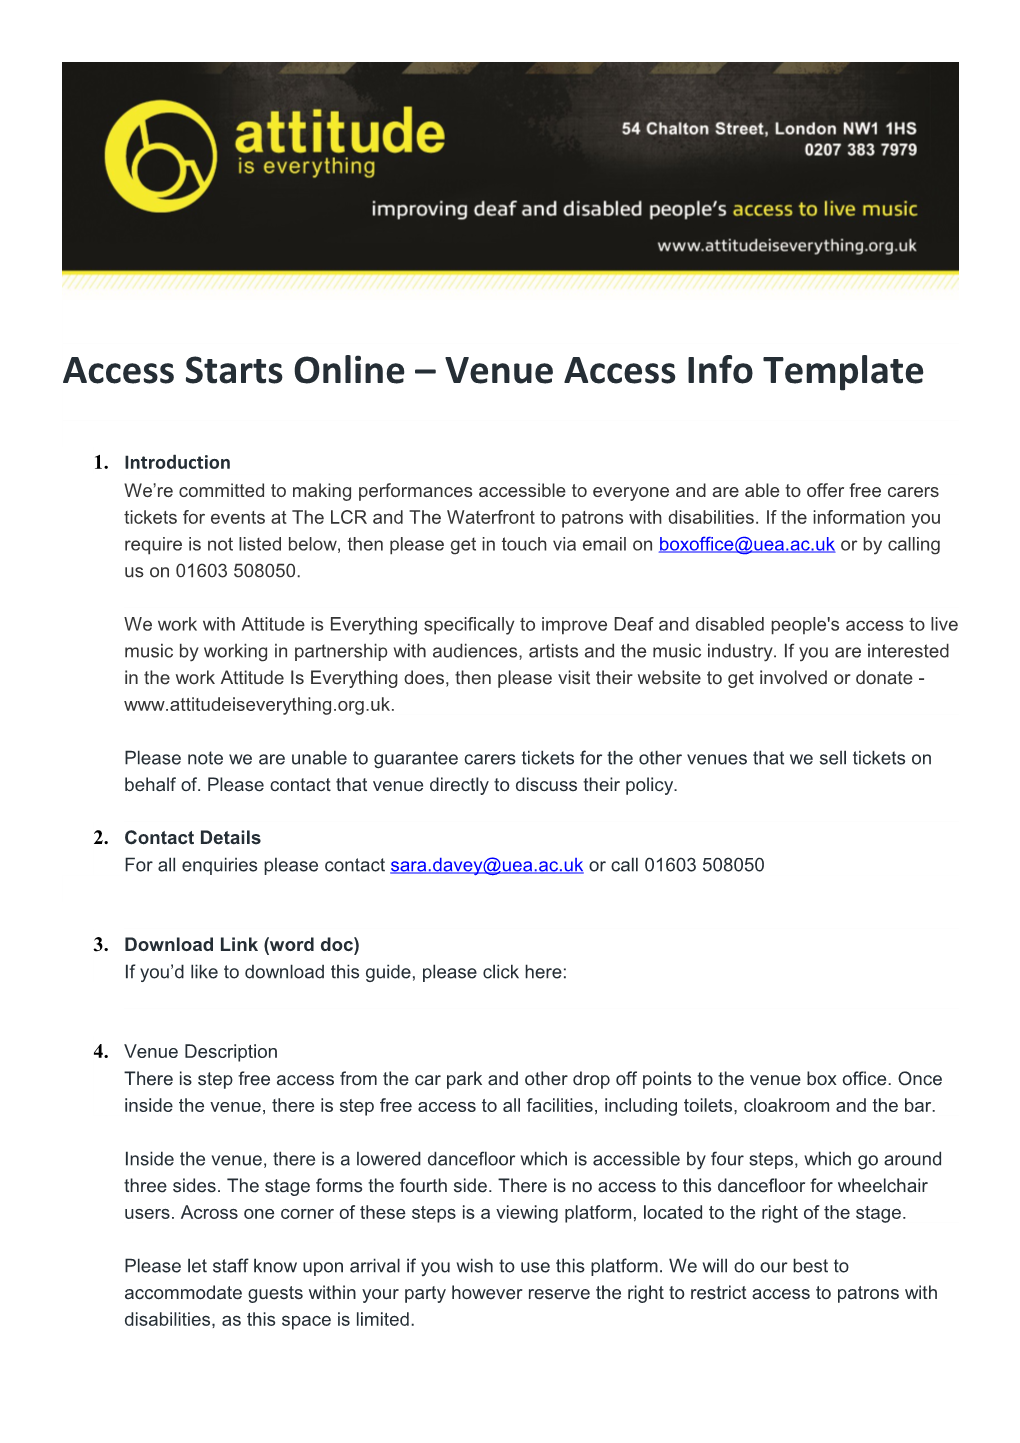 Access Starts Online Venue Access Info Template